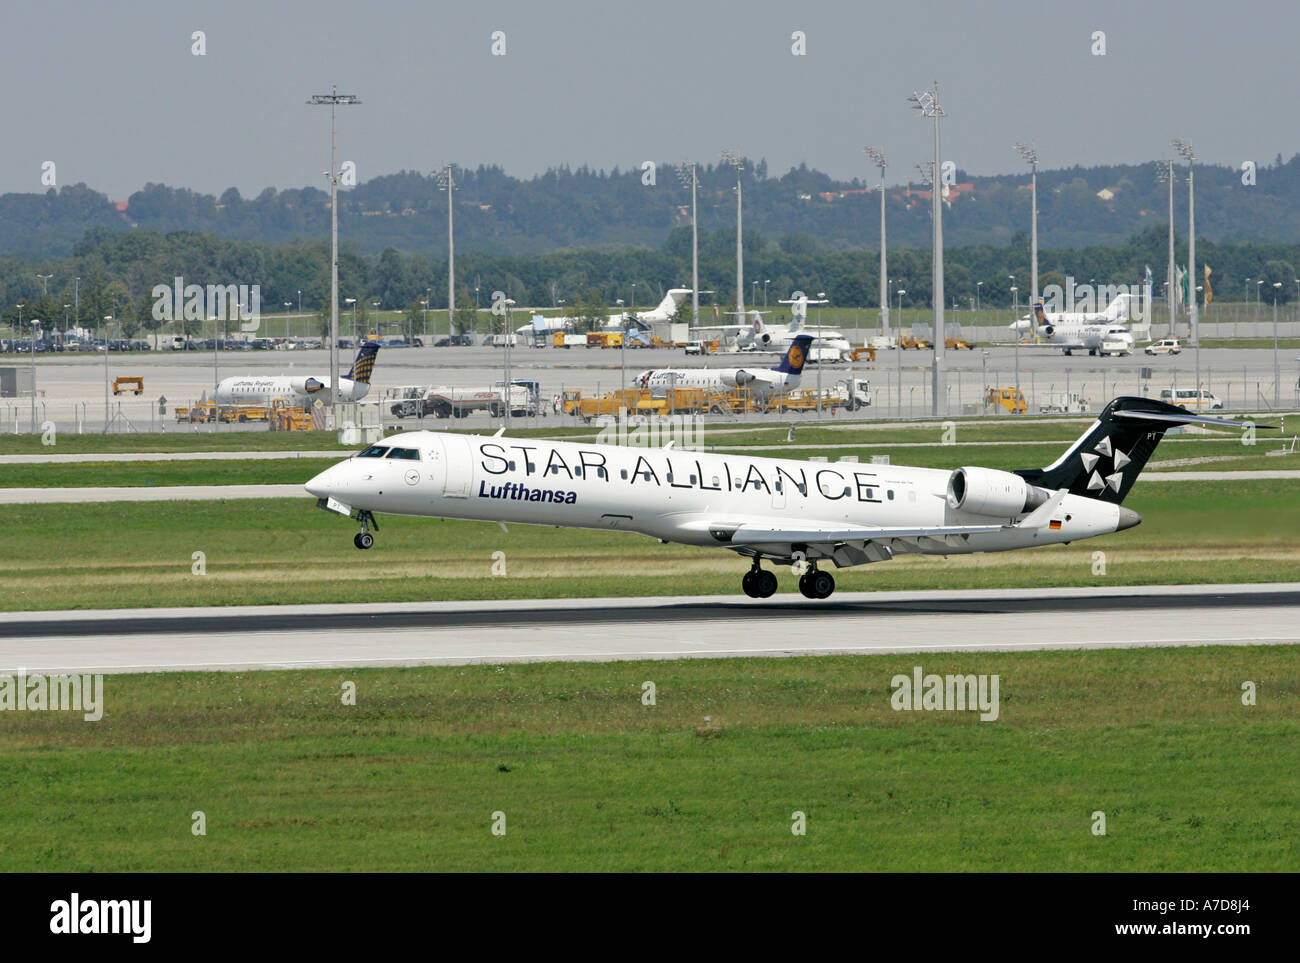 Munich, GER, 11. Aug. 2005 - A Lufthansa StarAlliance-Jet of type Canadair CRJ750 touch down at Munich Airport. Stock Photo